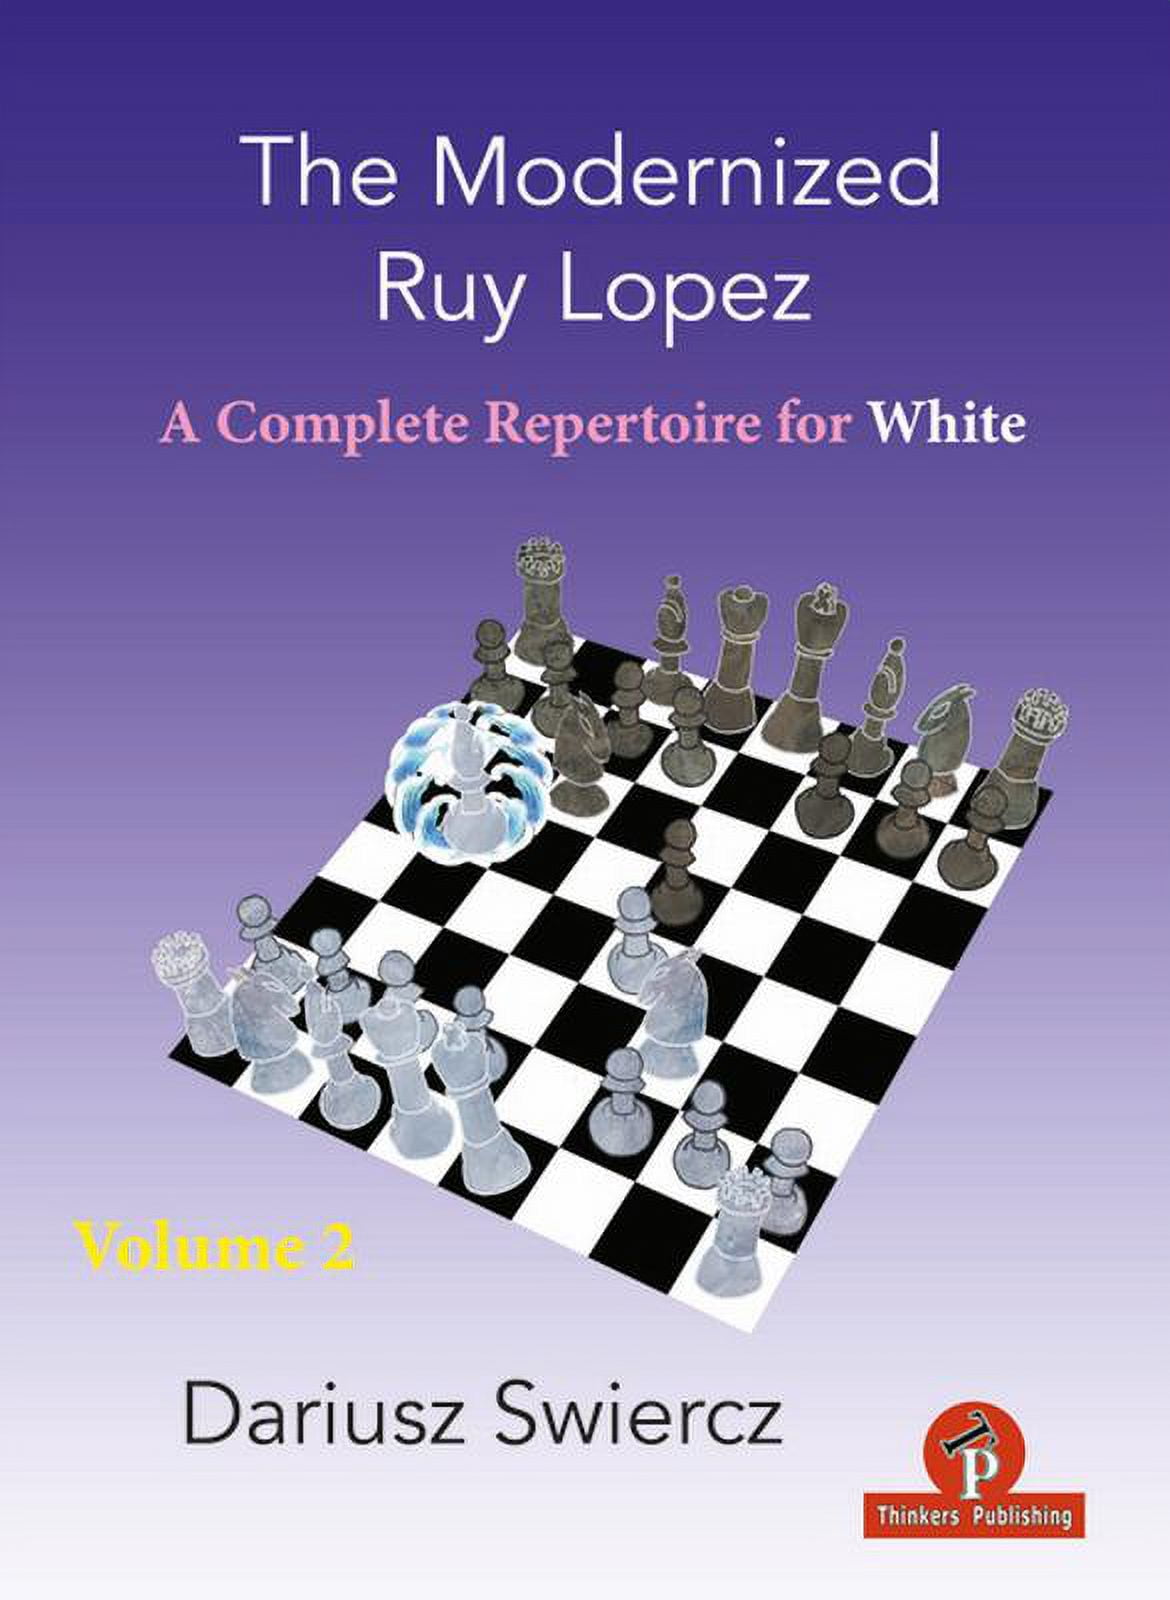 The Modernized Open Ruy Lopez